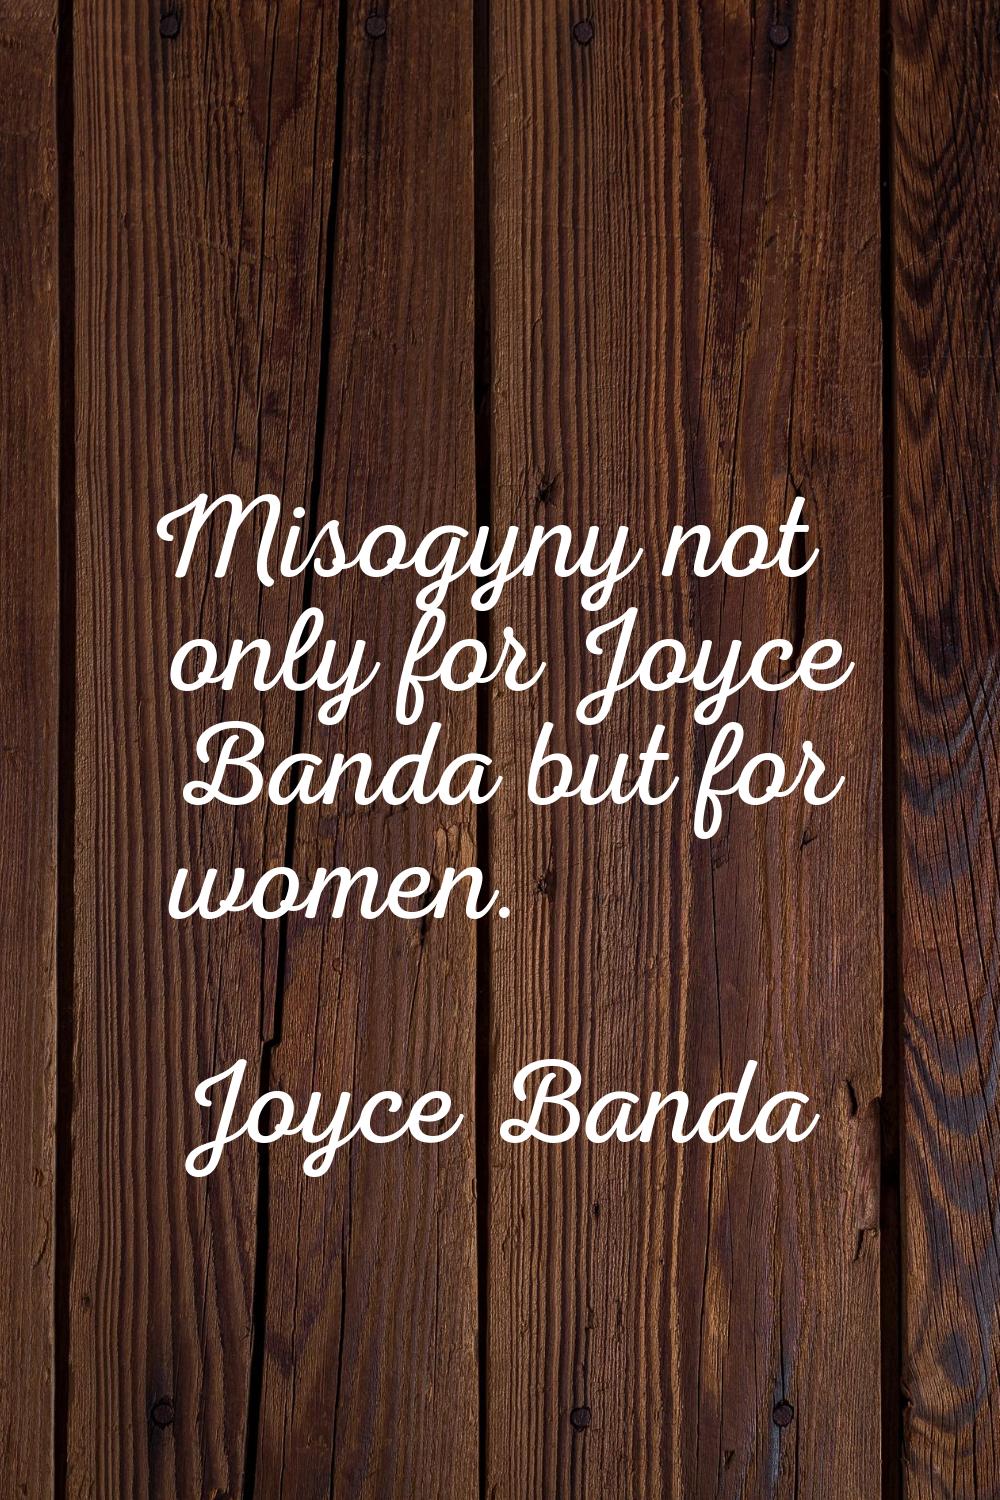 Misogyny not only for Joyce Banda but for women.